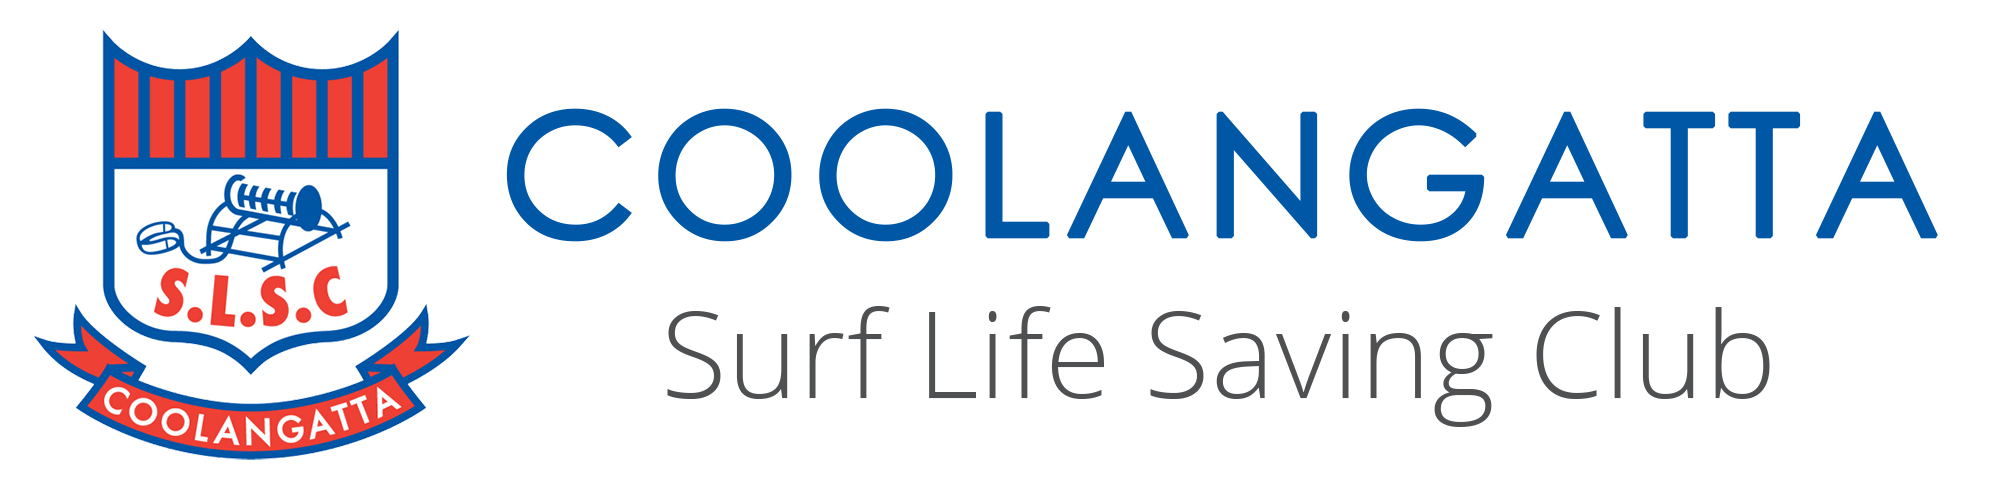 Coolangatta Surf Life Saving Club